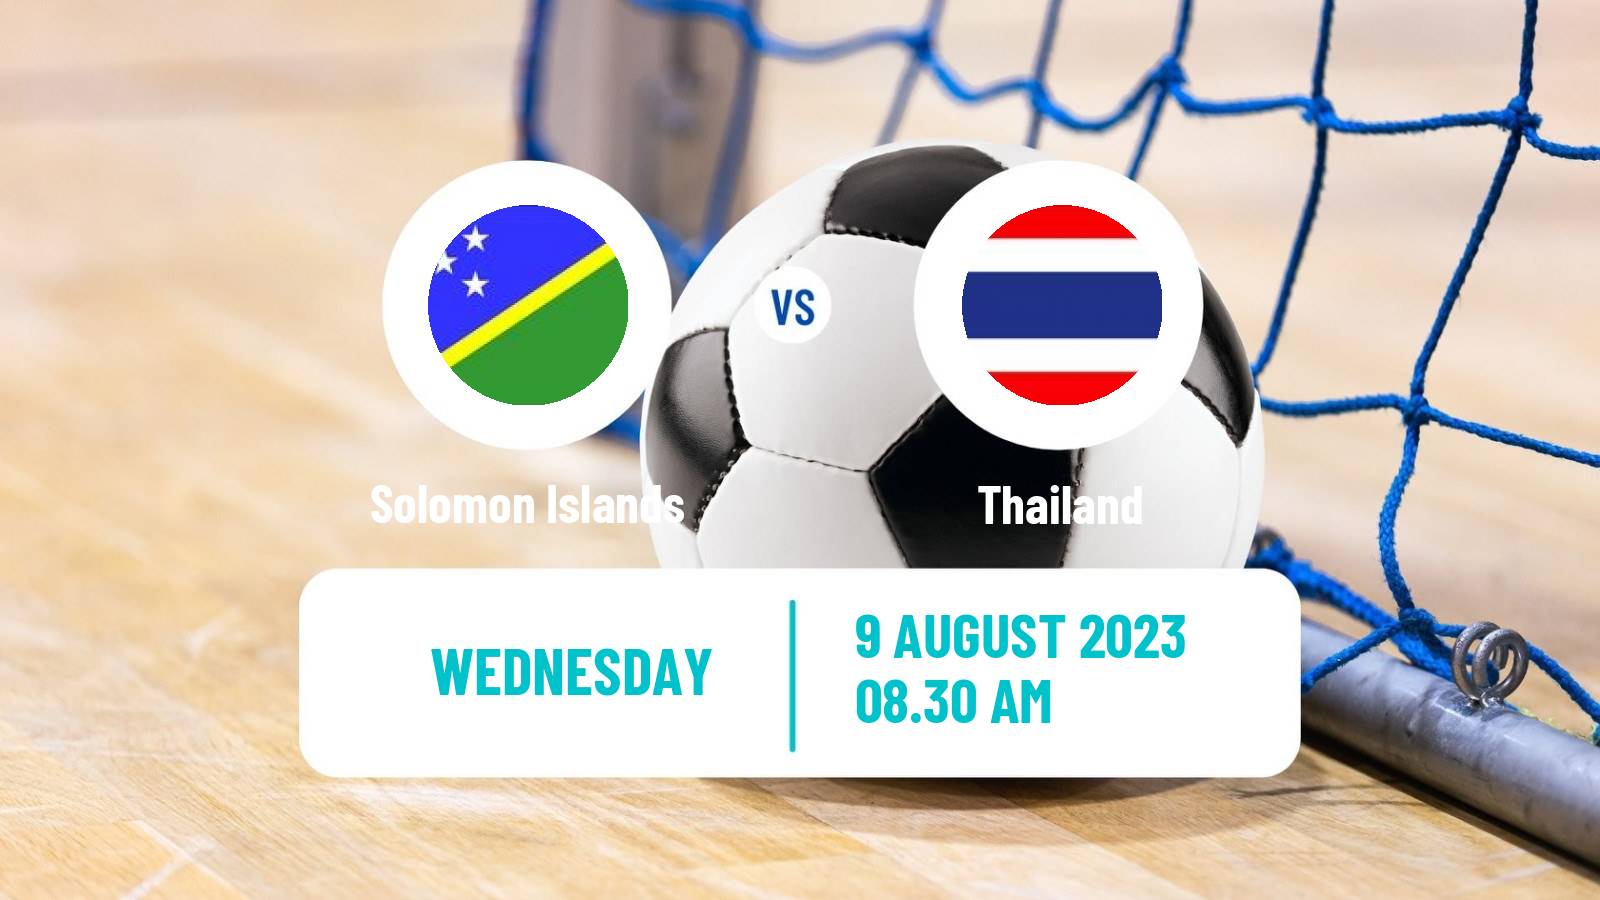 Futsal Continental Championship Futsal Solomon Islands - Thailand